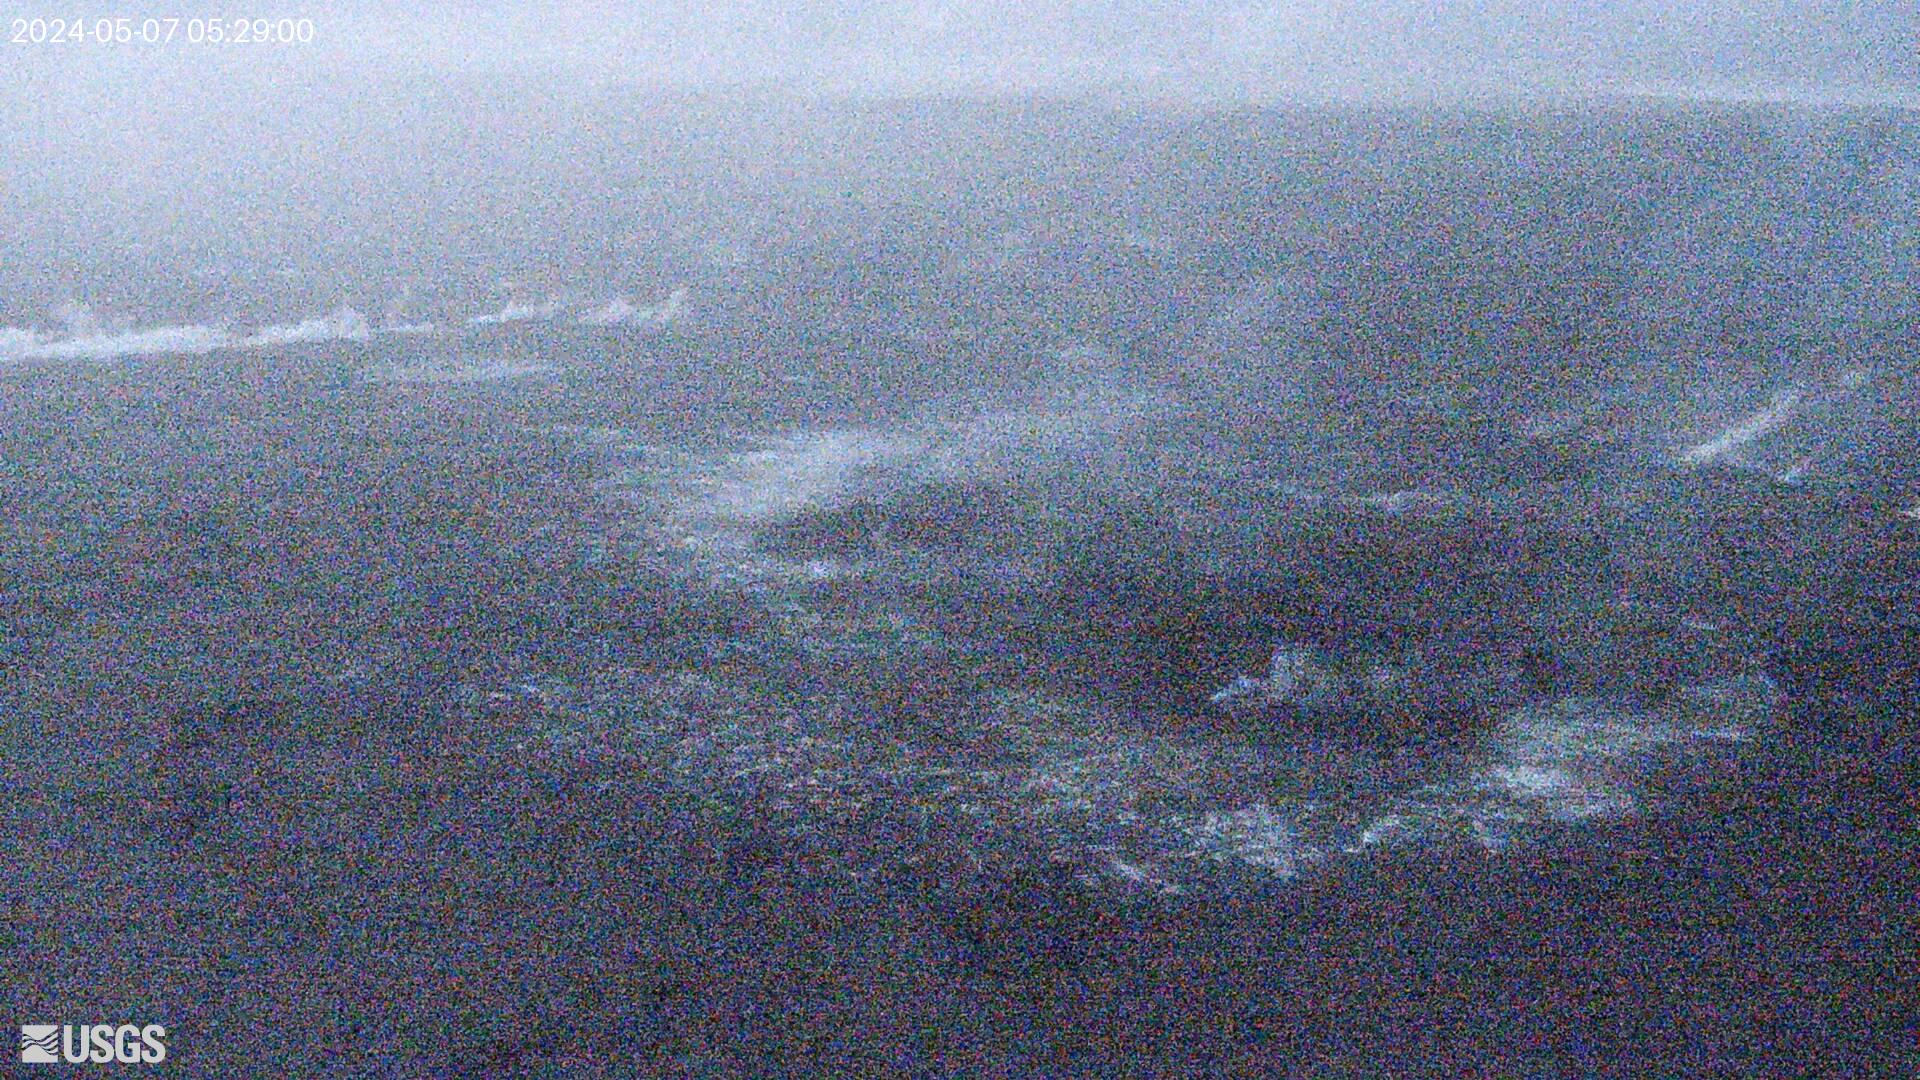 Current Kilauea Vent Image